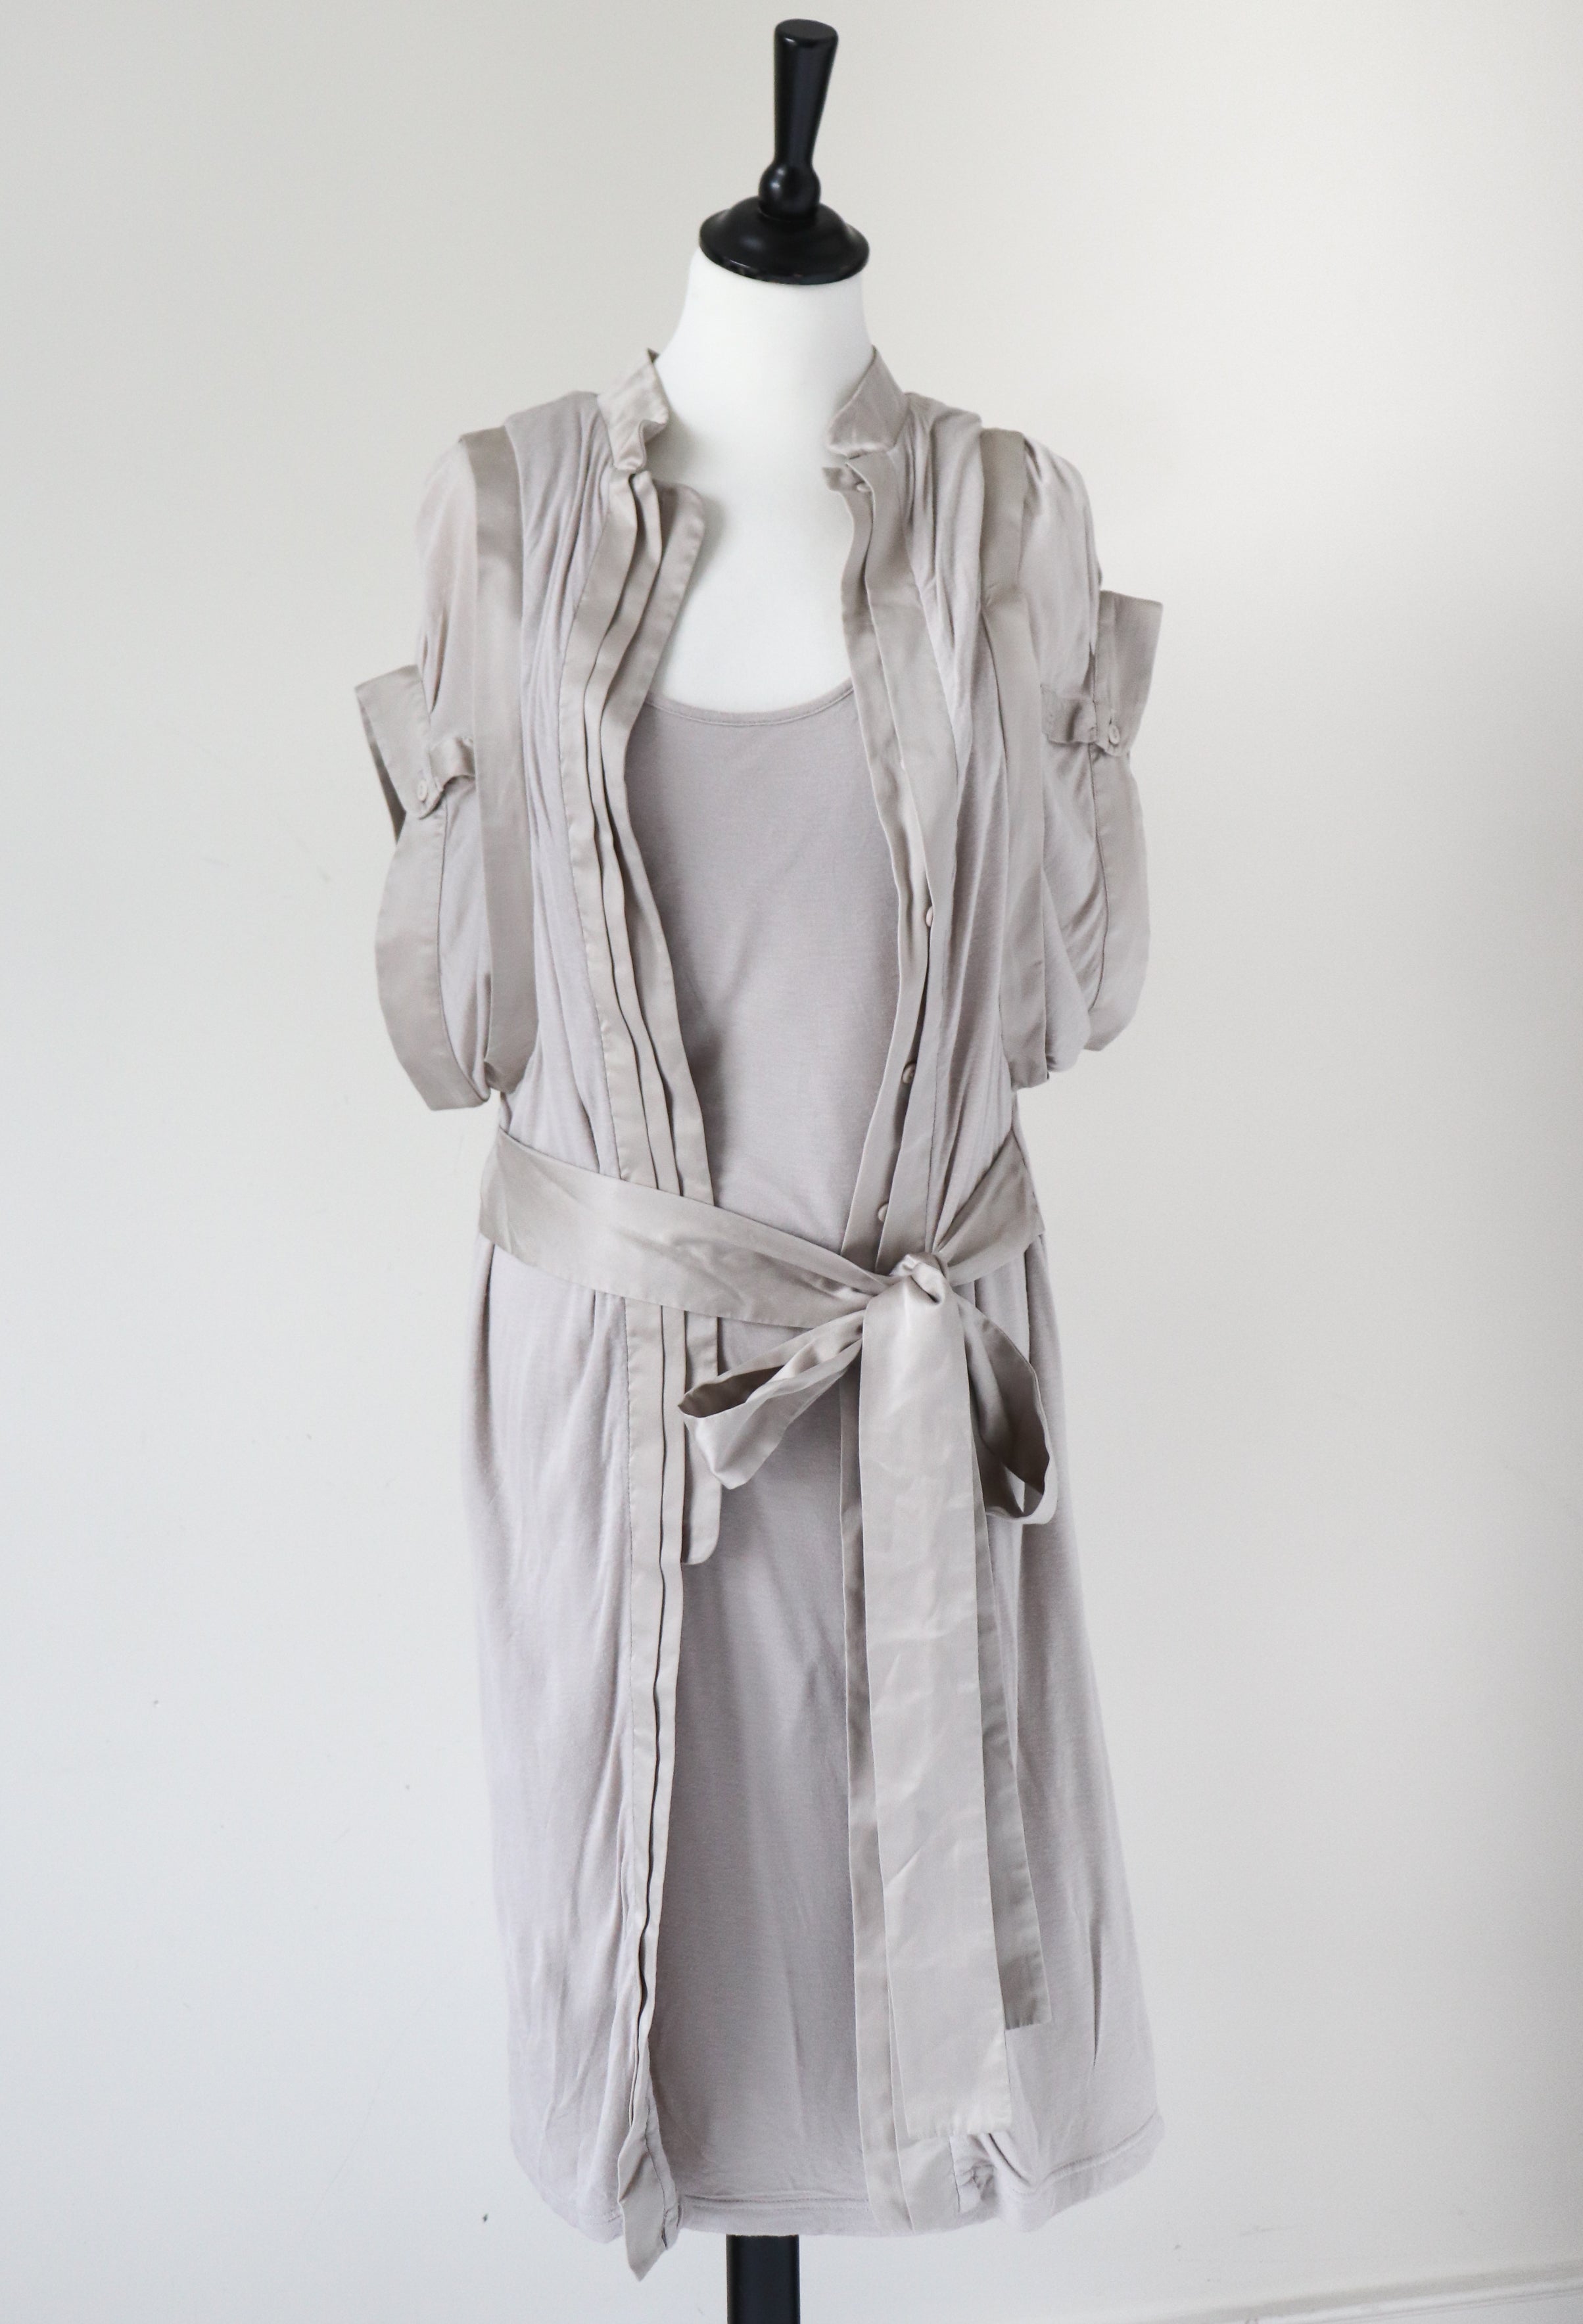 Preen Thornton Bragazzi  Vintage Dress - Beige -  Label M - Fit UK 10 / S